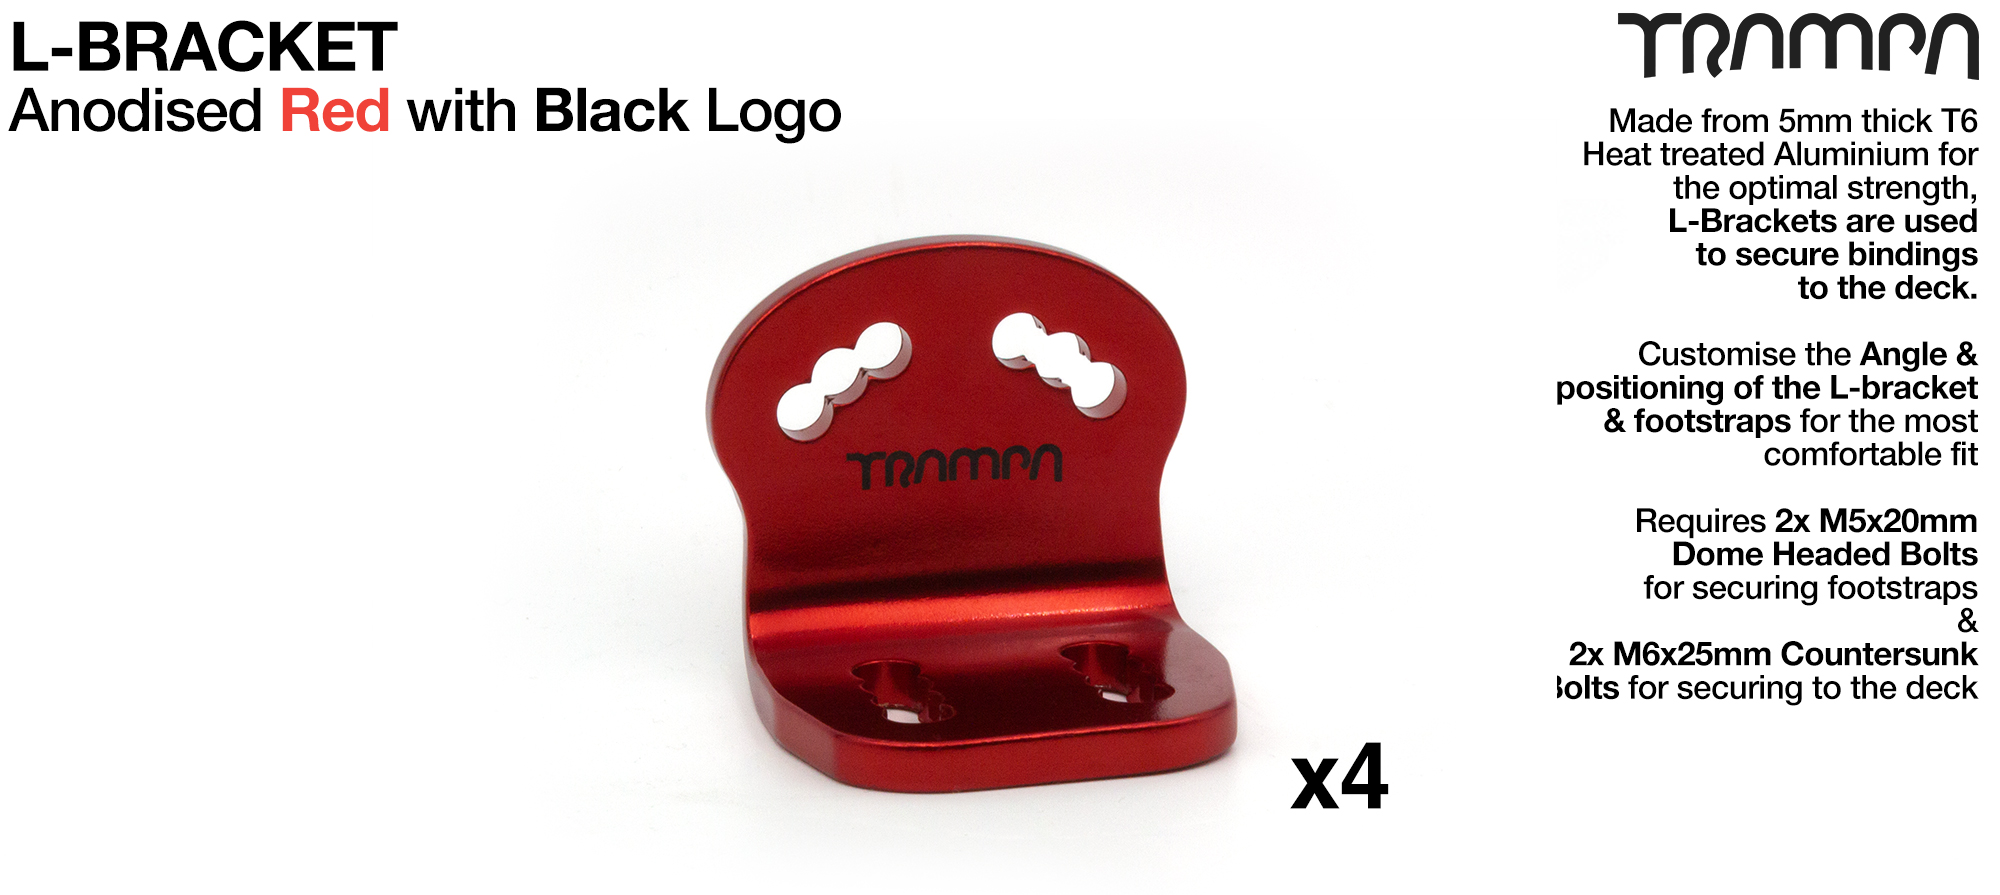 L Bracket - Anodised RED with BLACK logo x4